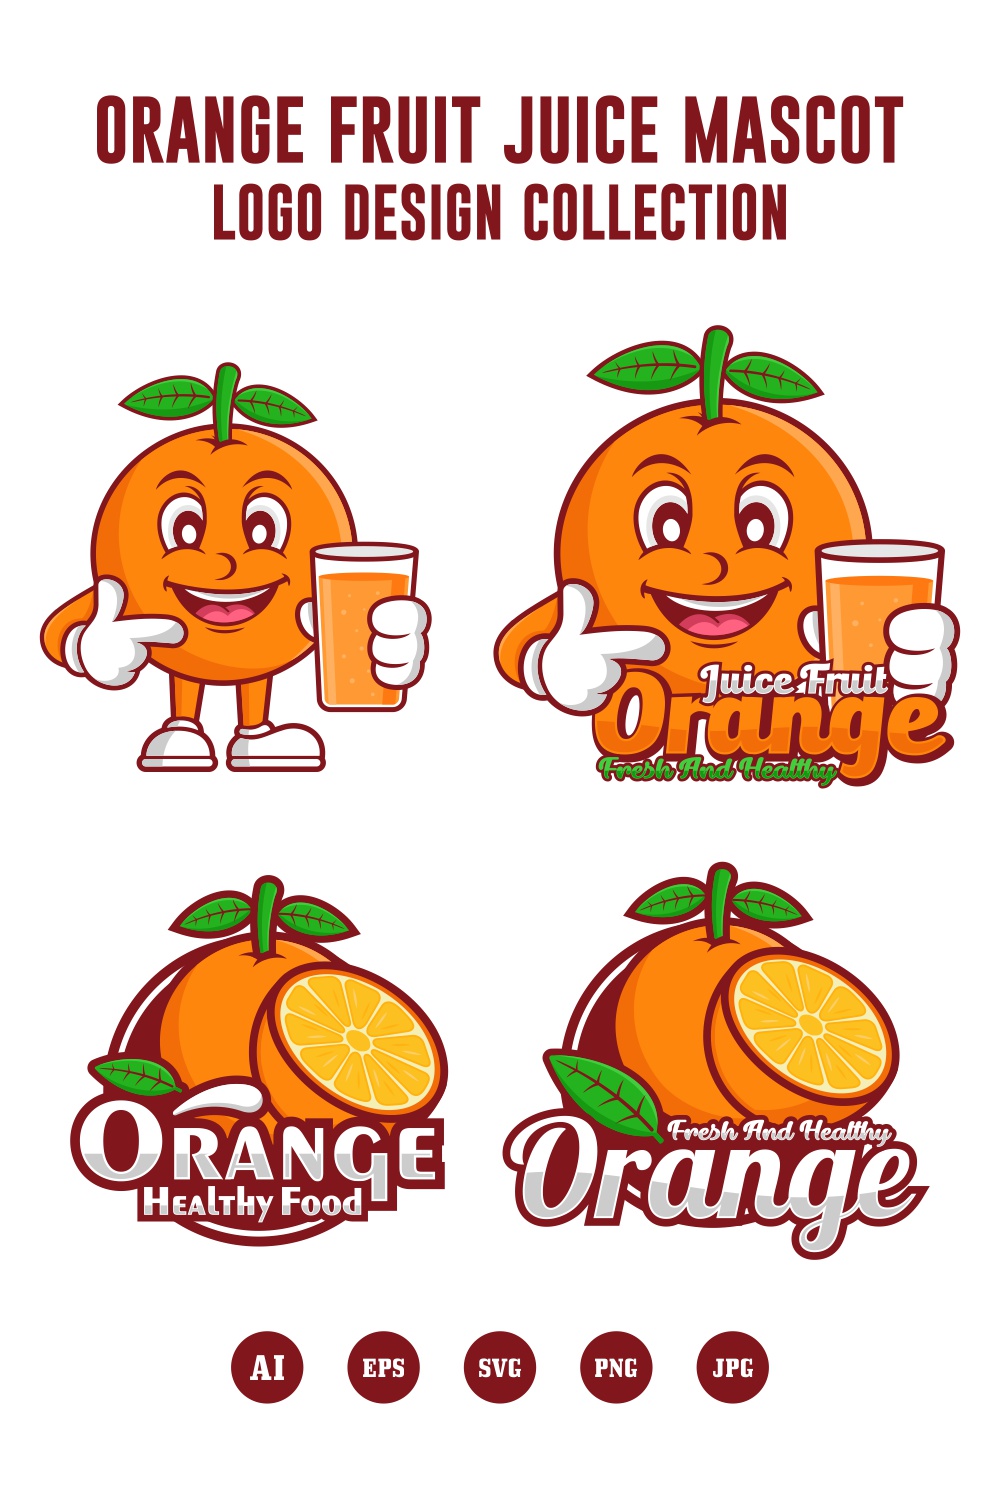 Set Orange fruit juice mascot logo - $8 pinterest preview image.